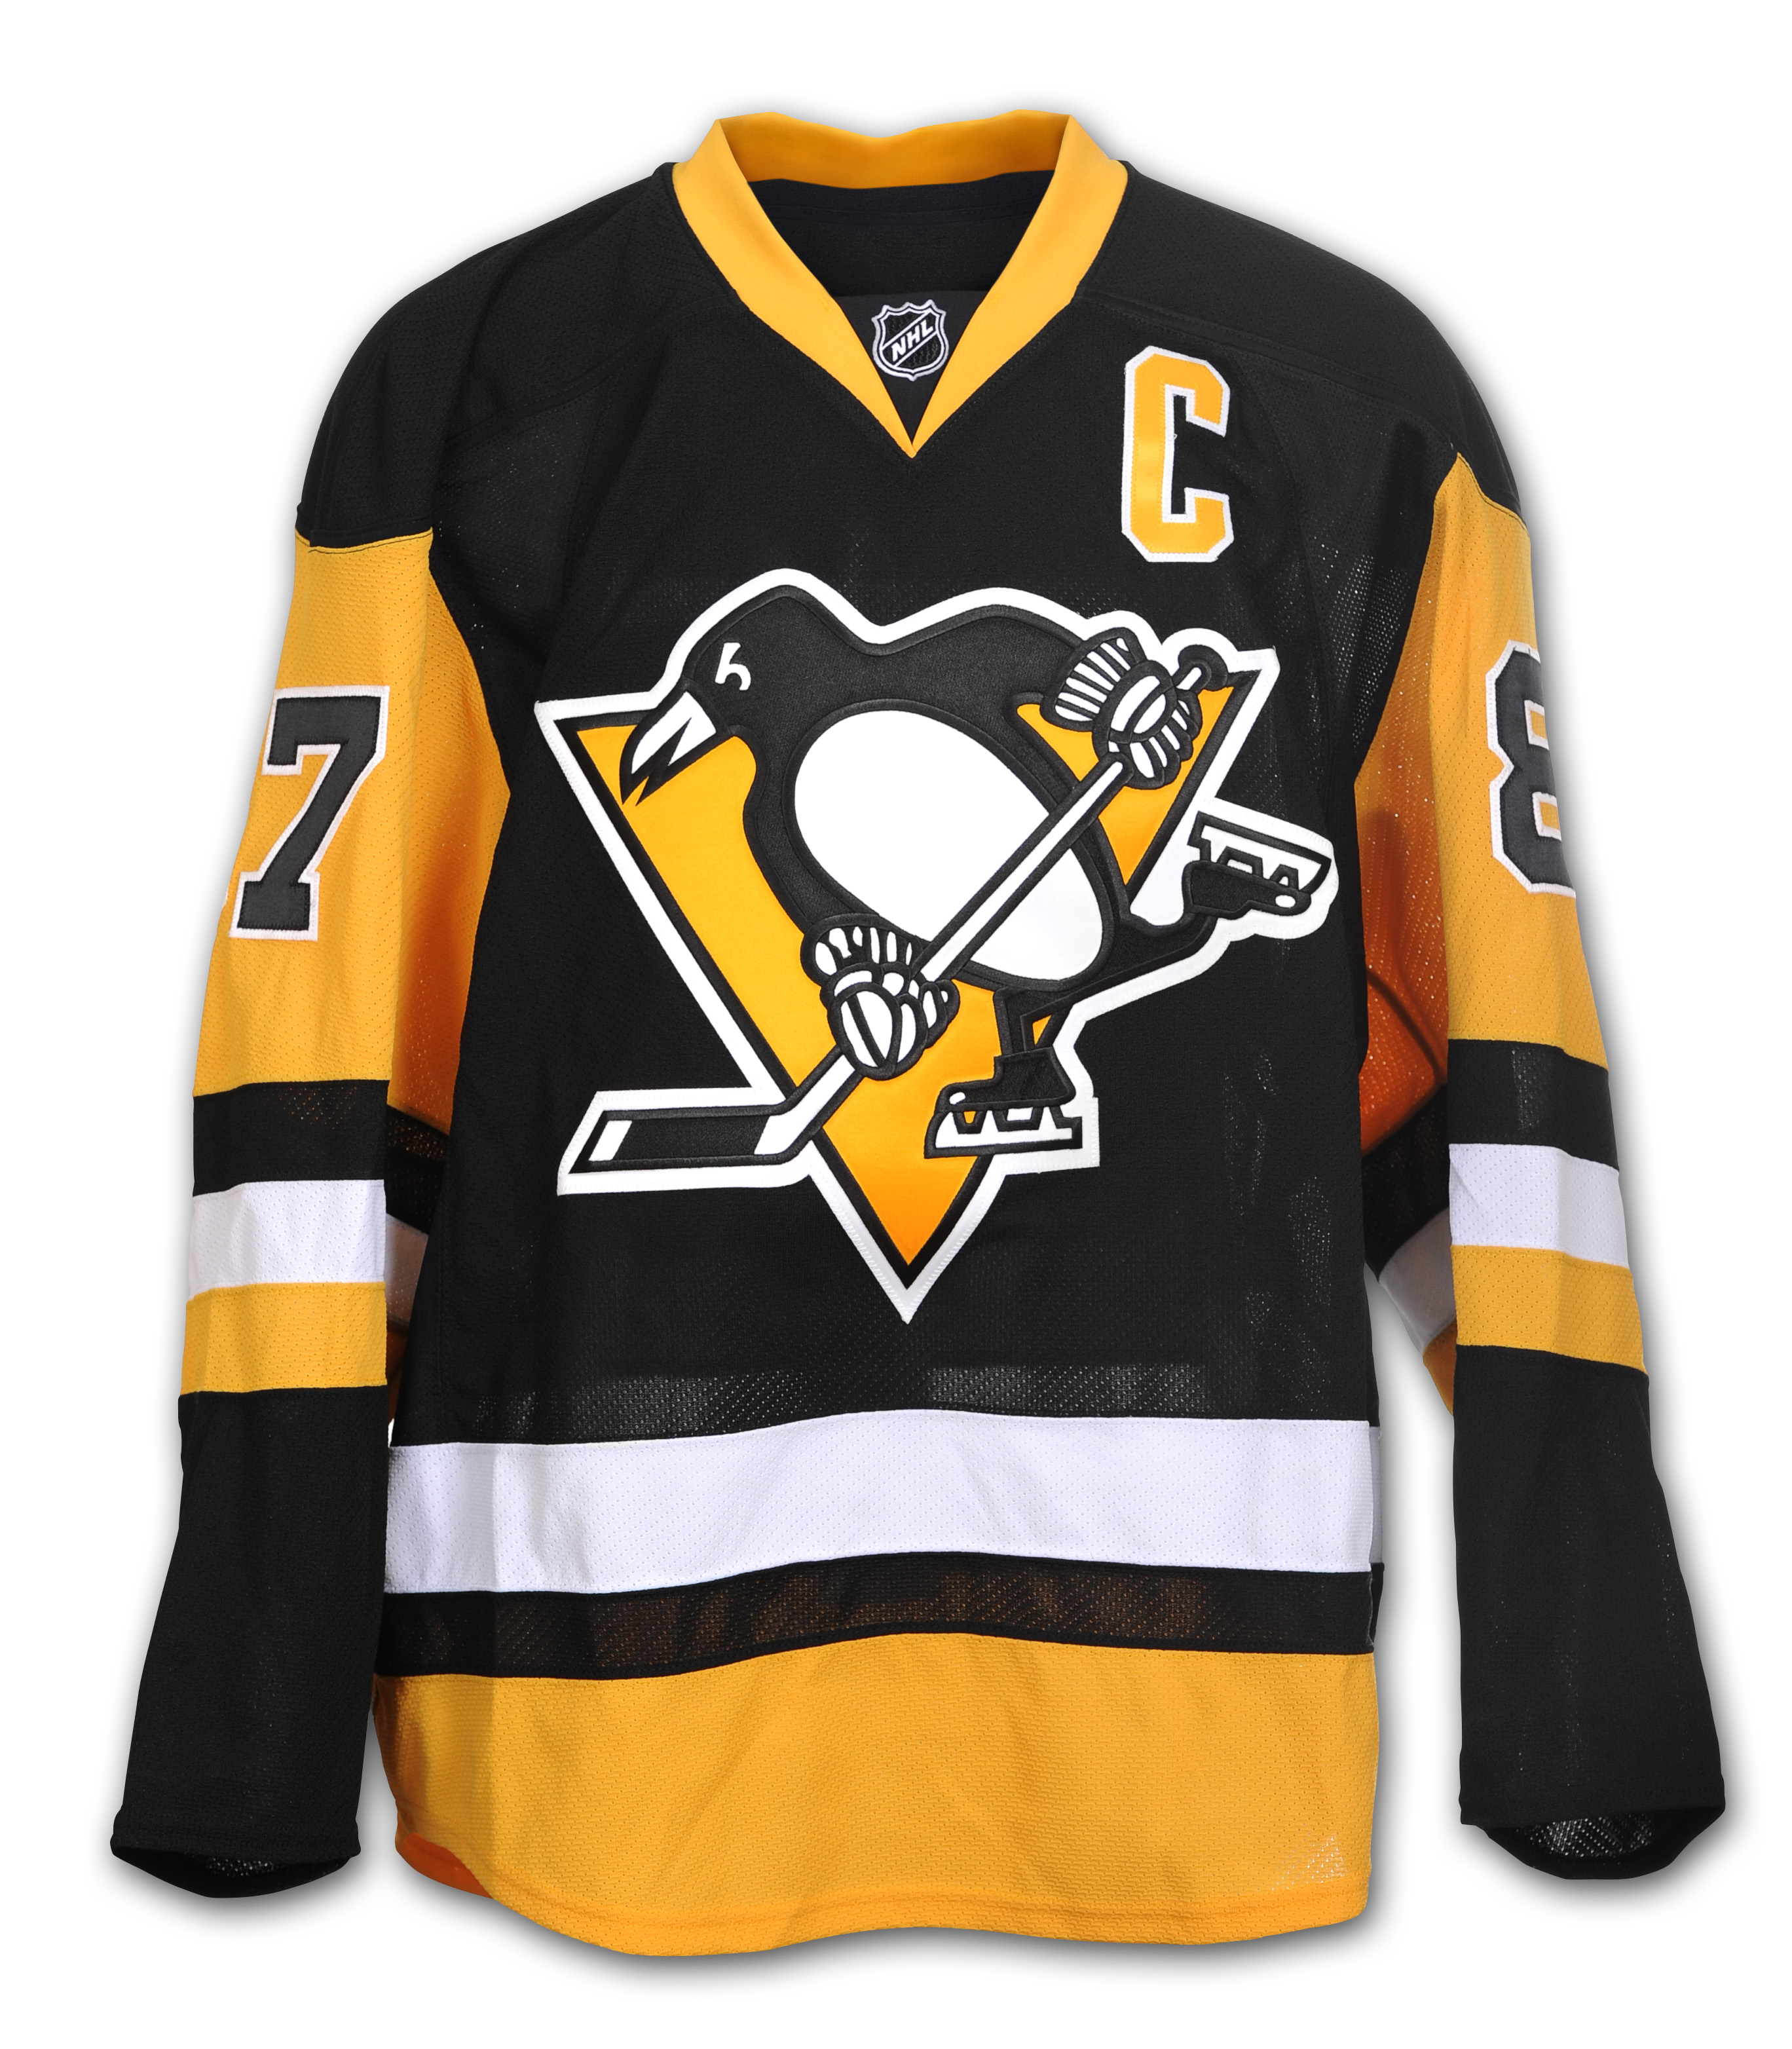 2015 penguins jersey